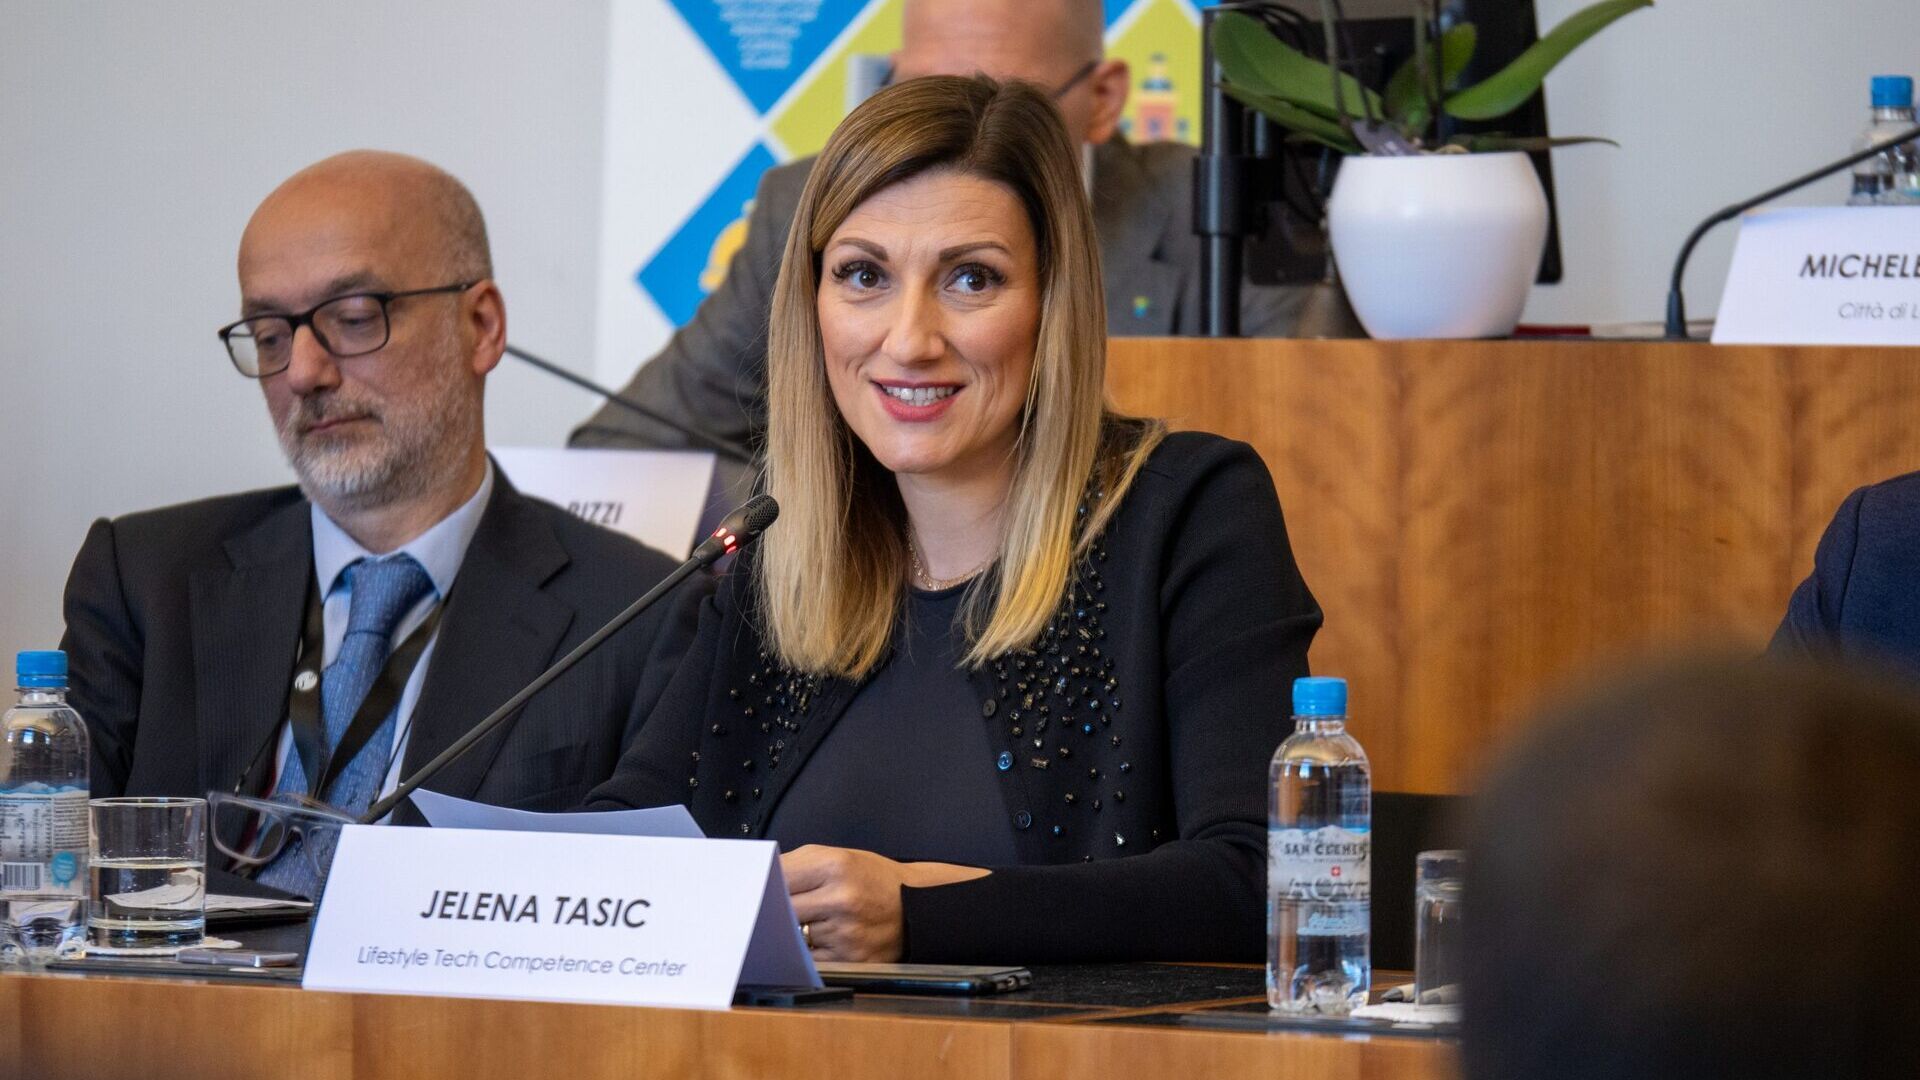 LTCC: Jelena Tašić Pizzolato er administrerende direktør for Lifestyle Tech Competence Center Association